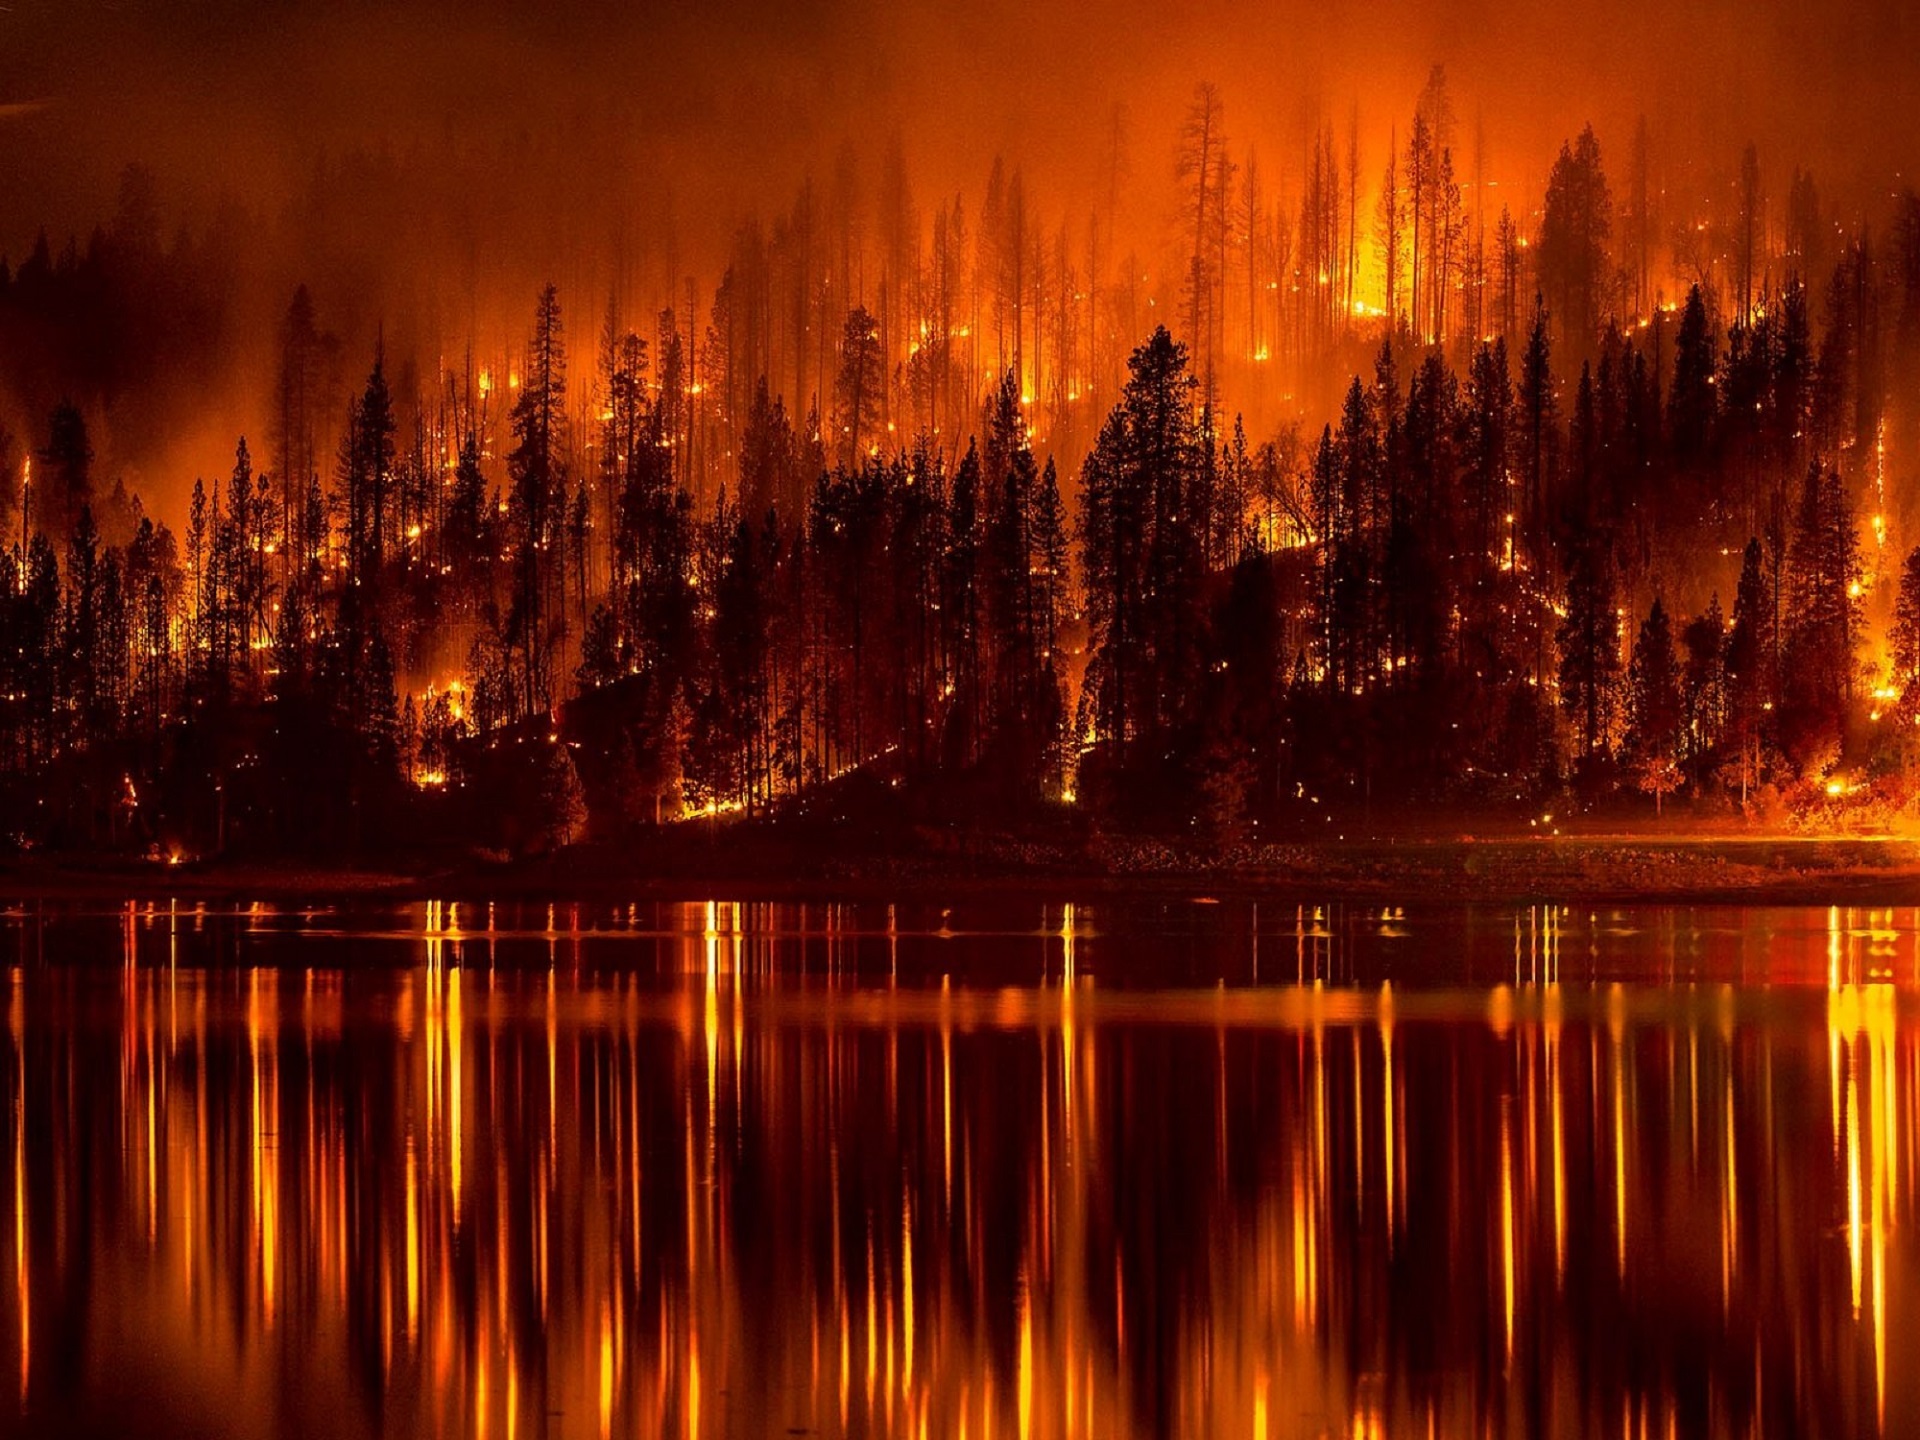 Image credit: Pixaby user 'skeeze' https://pixabay.com/en/forest-fire-flames-burning-water-991479/